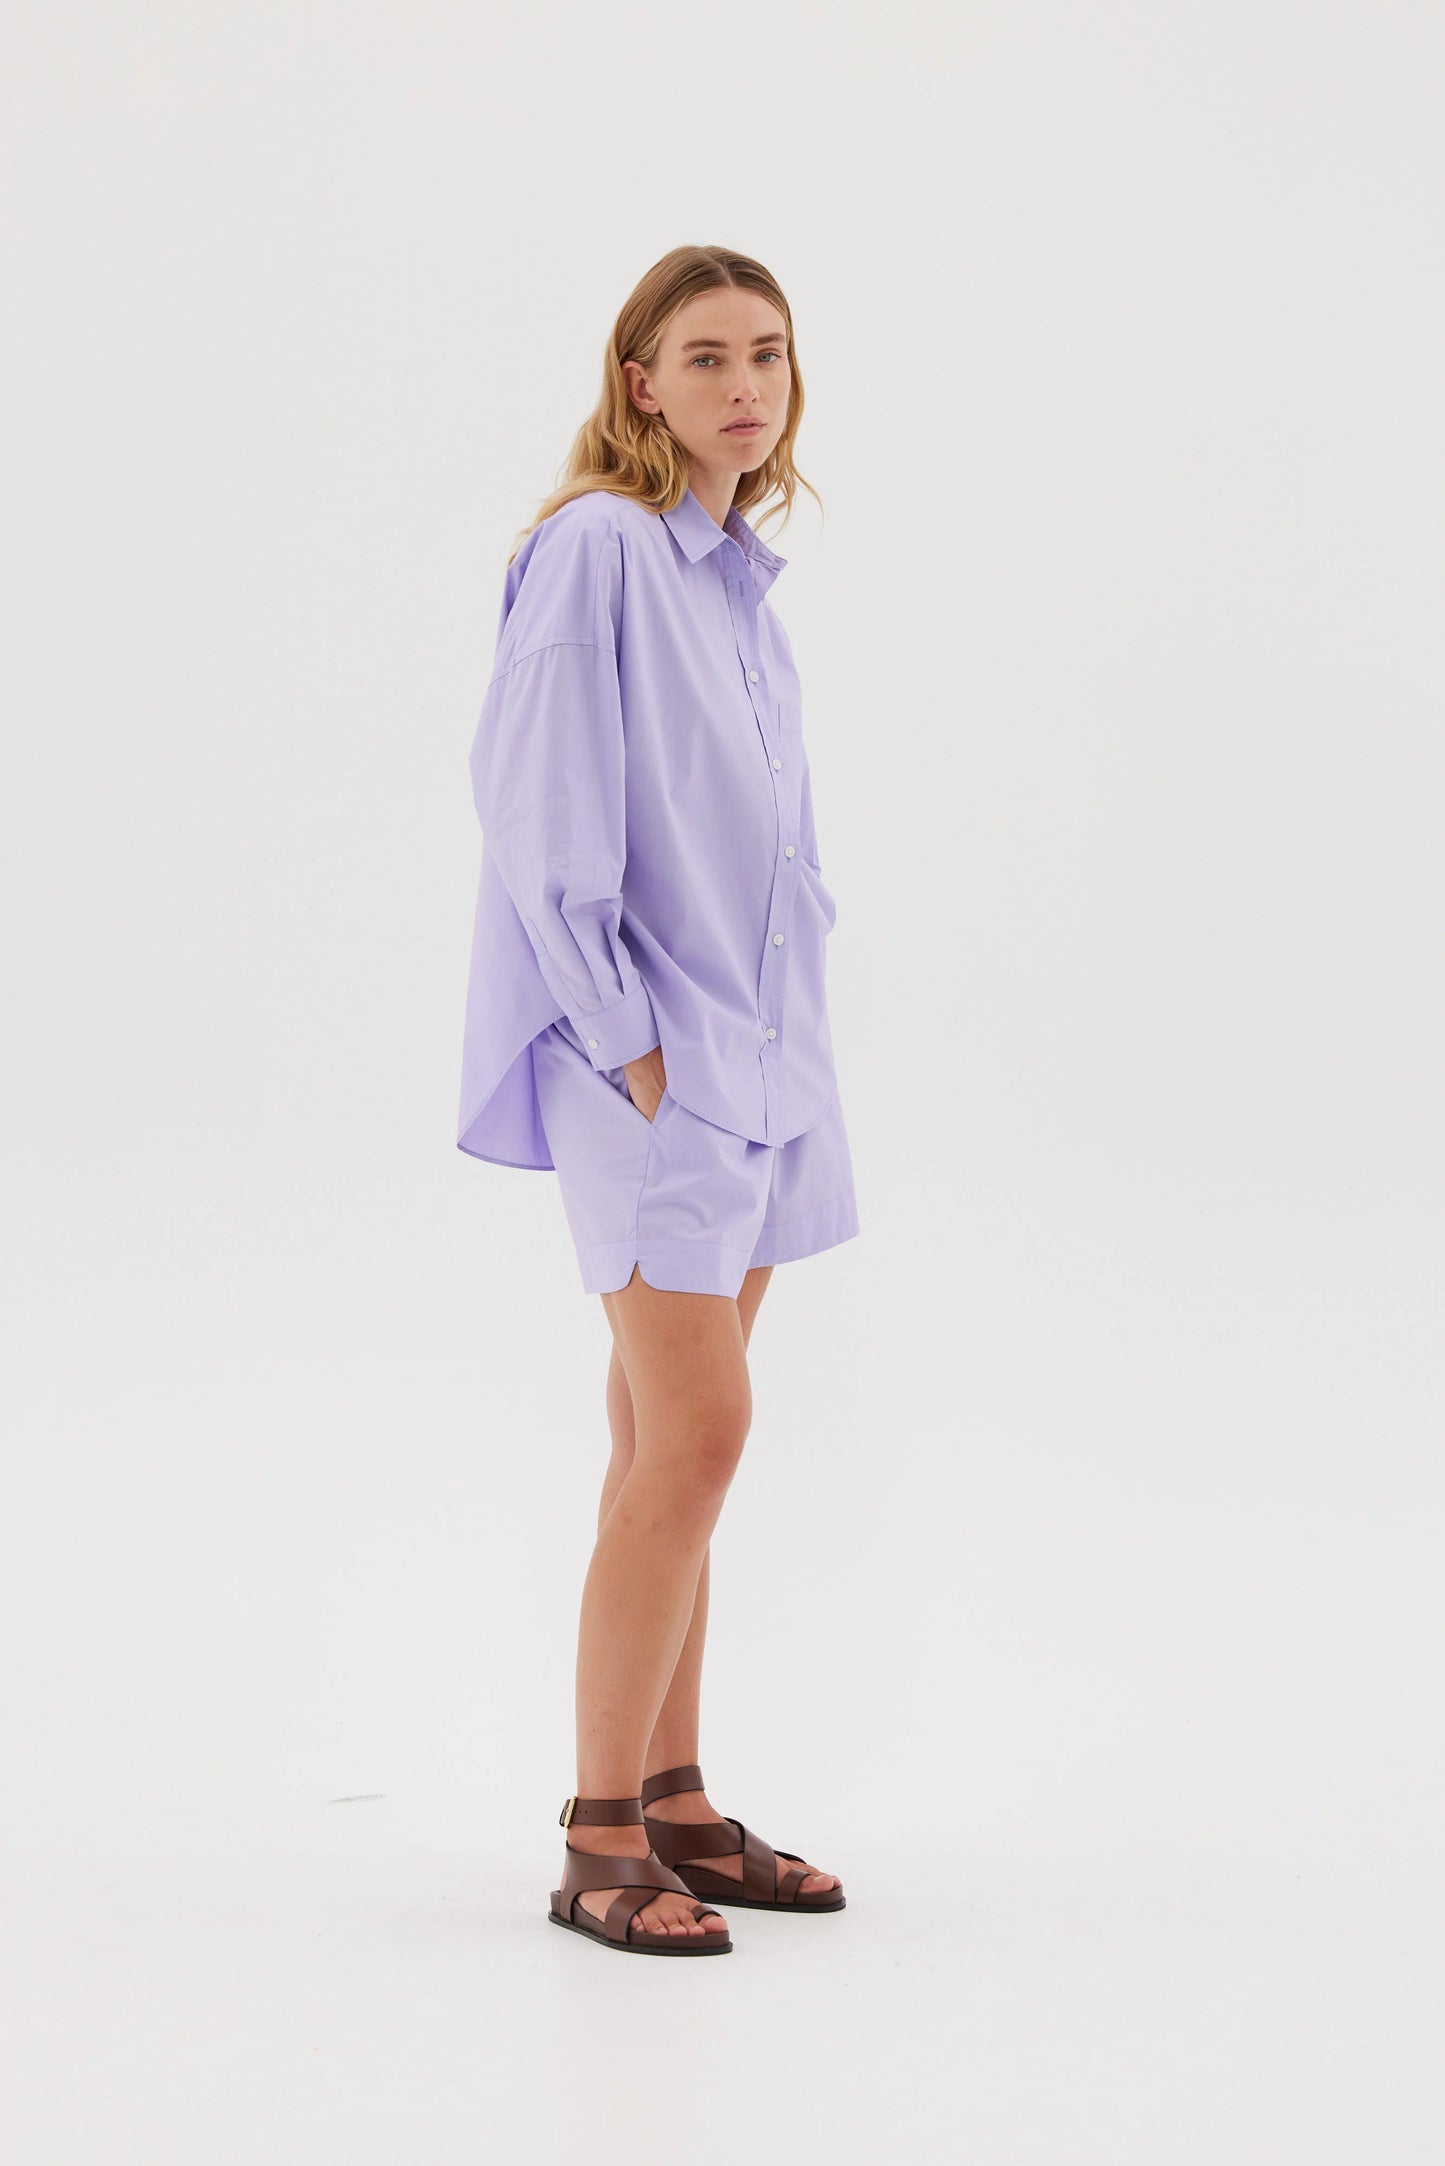 The Chiara Shirt in Violet Light